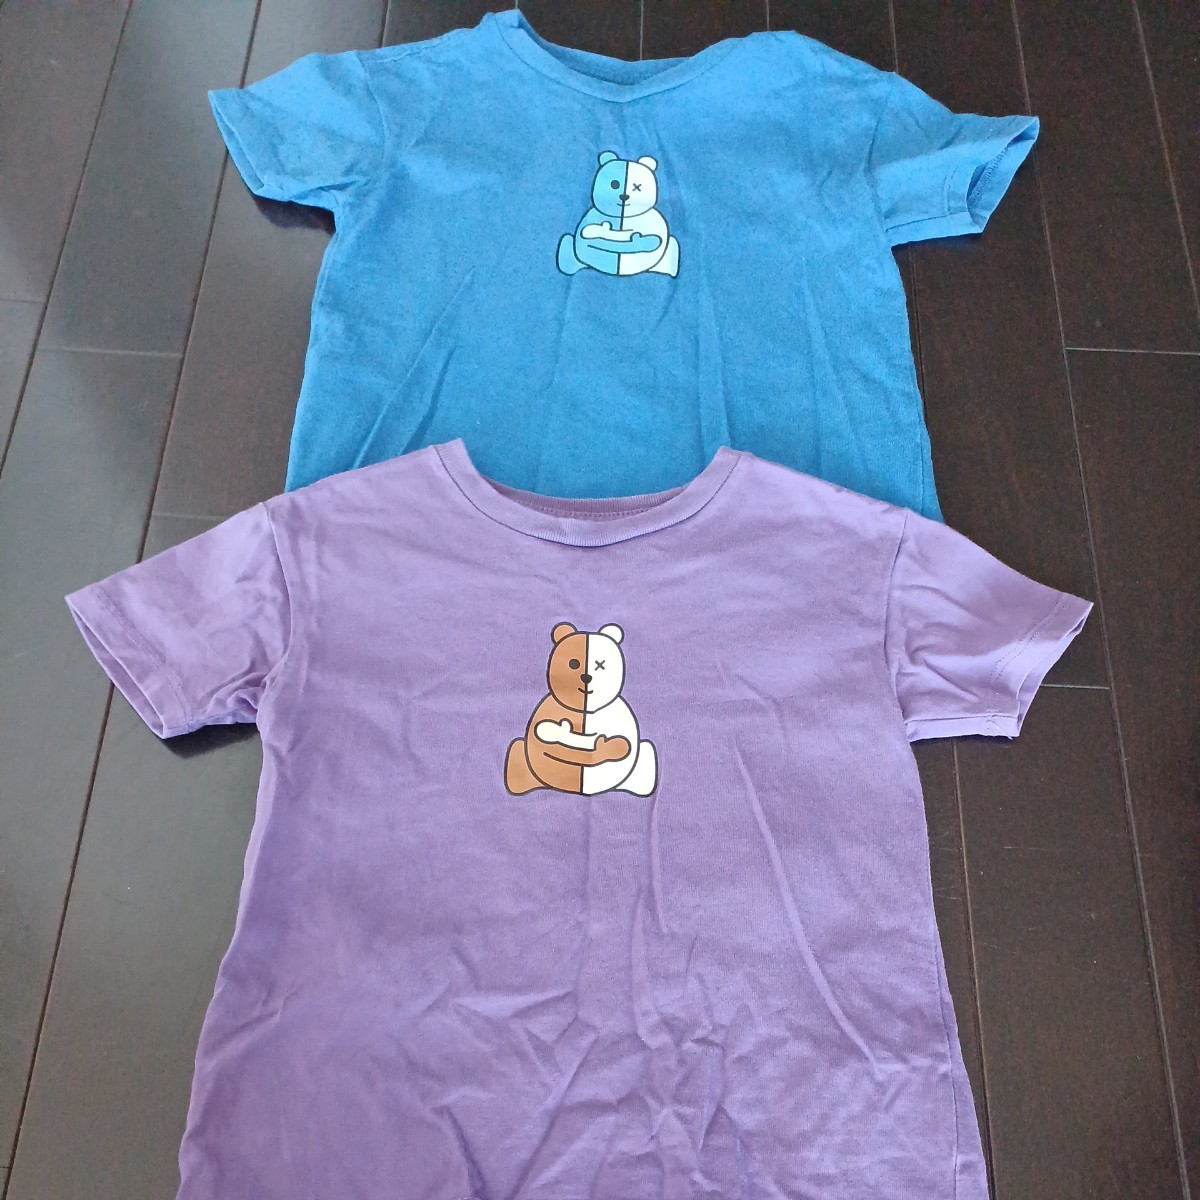 GAP KIDS Gap Kids short sleeves T-shirt 2 pieces set 2 -years old size used 